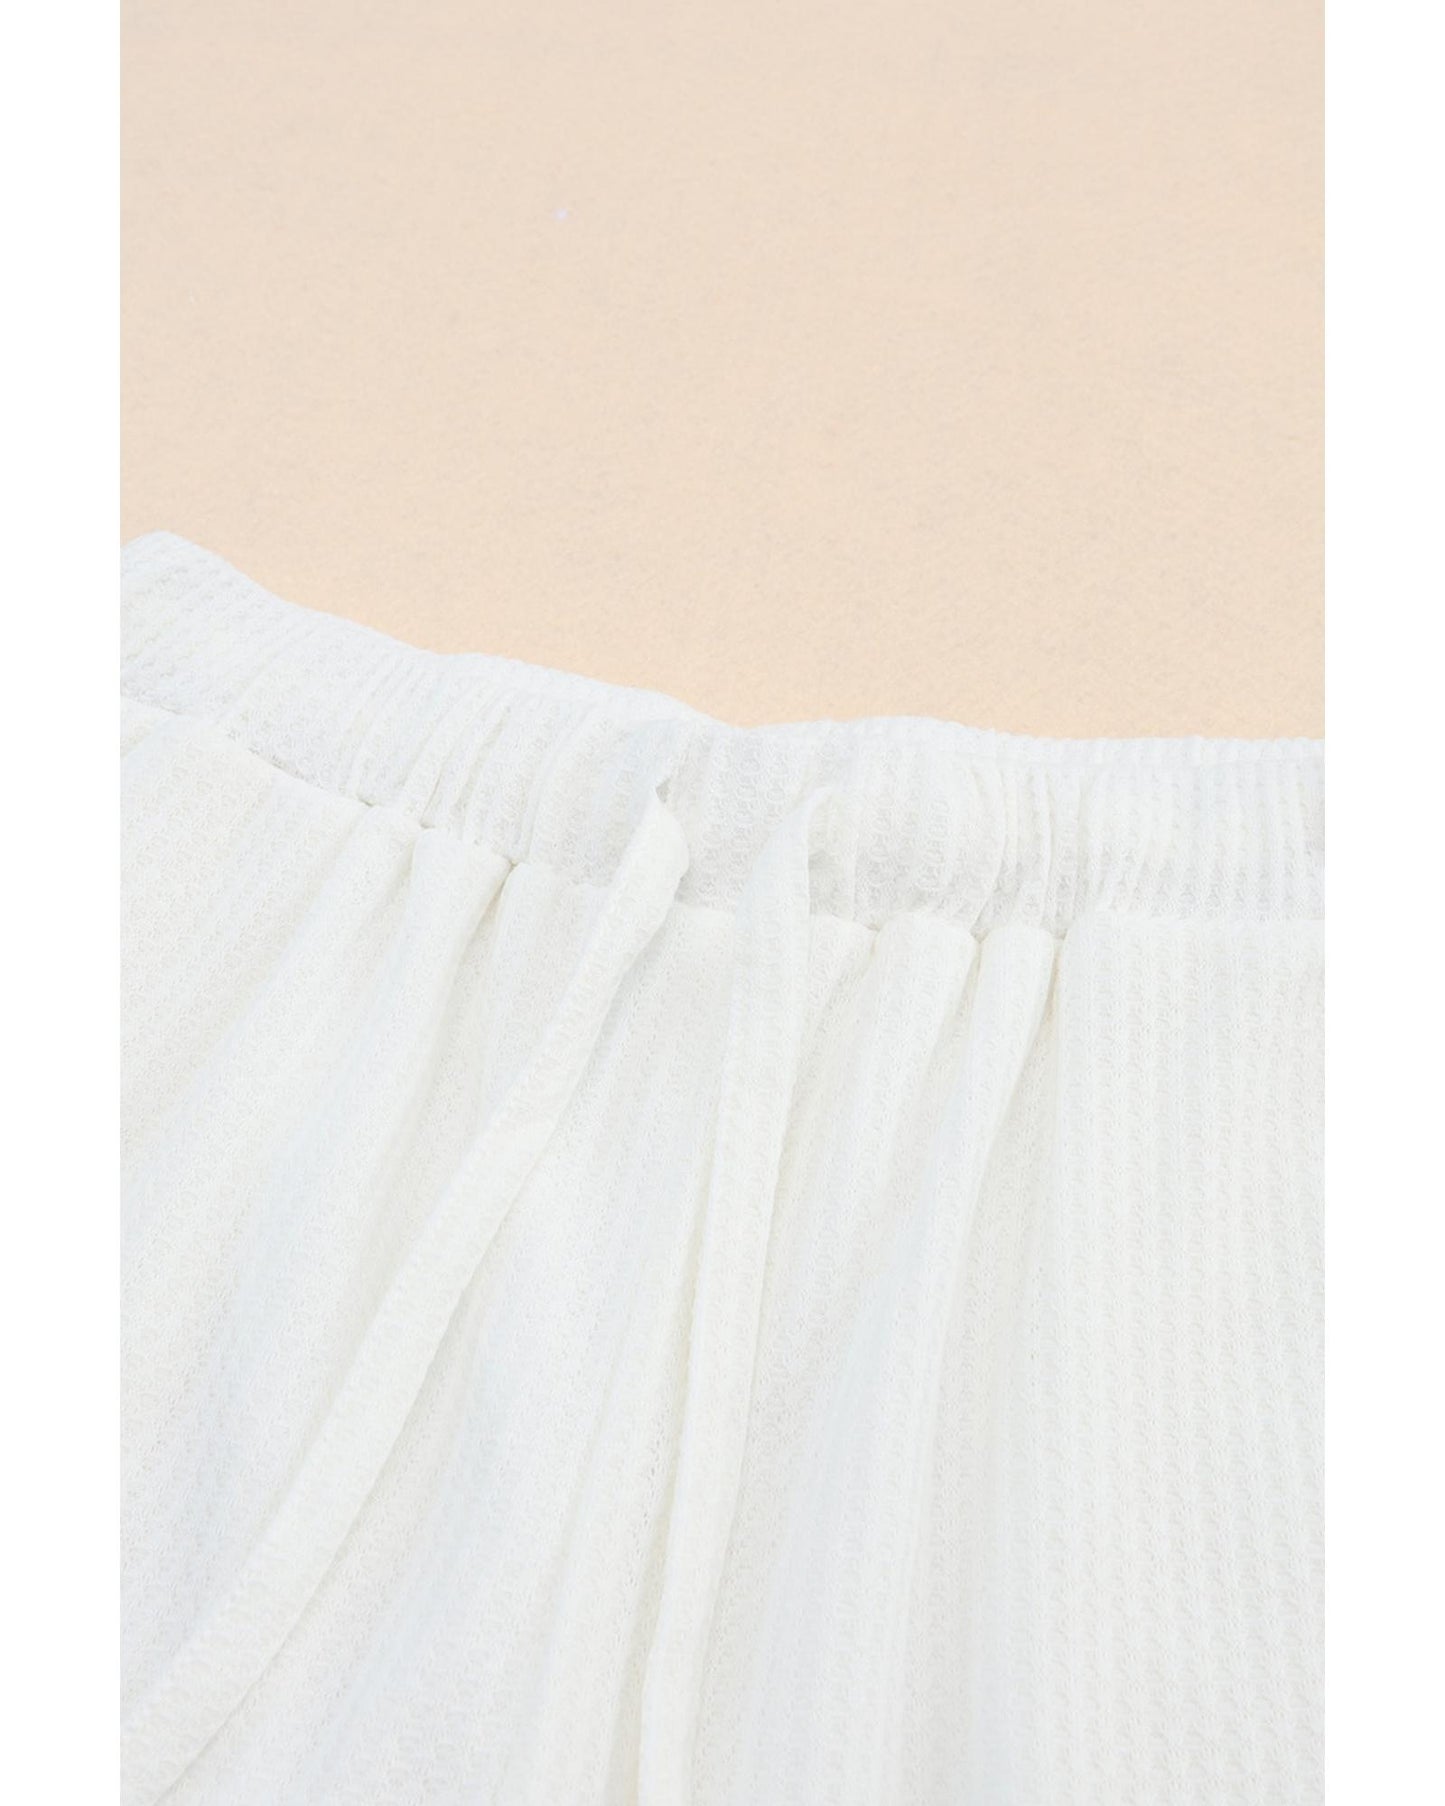 Azura Exchange Waffle Knit Lace-up High Waist Wide Leg Shorts - S